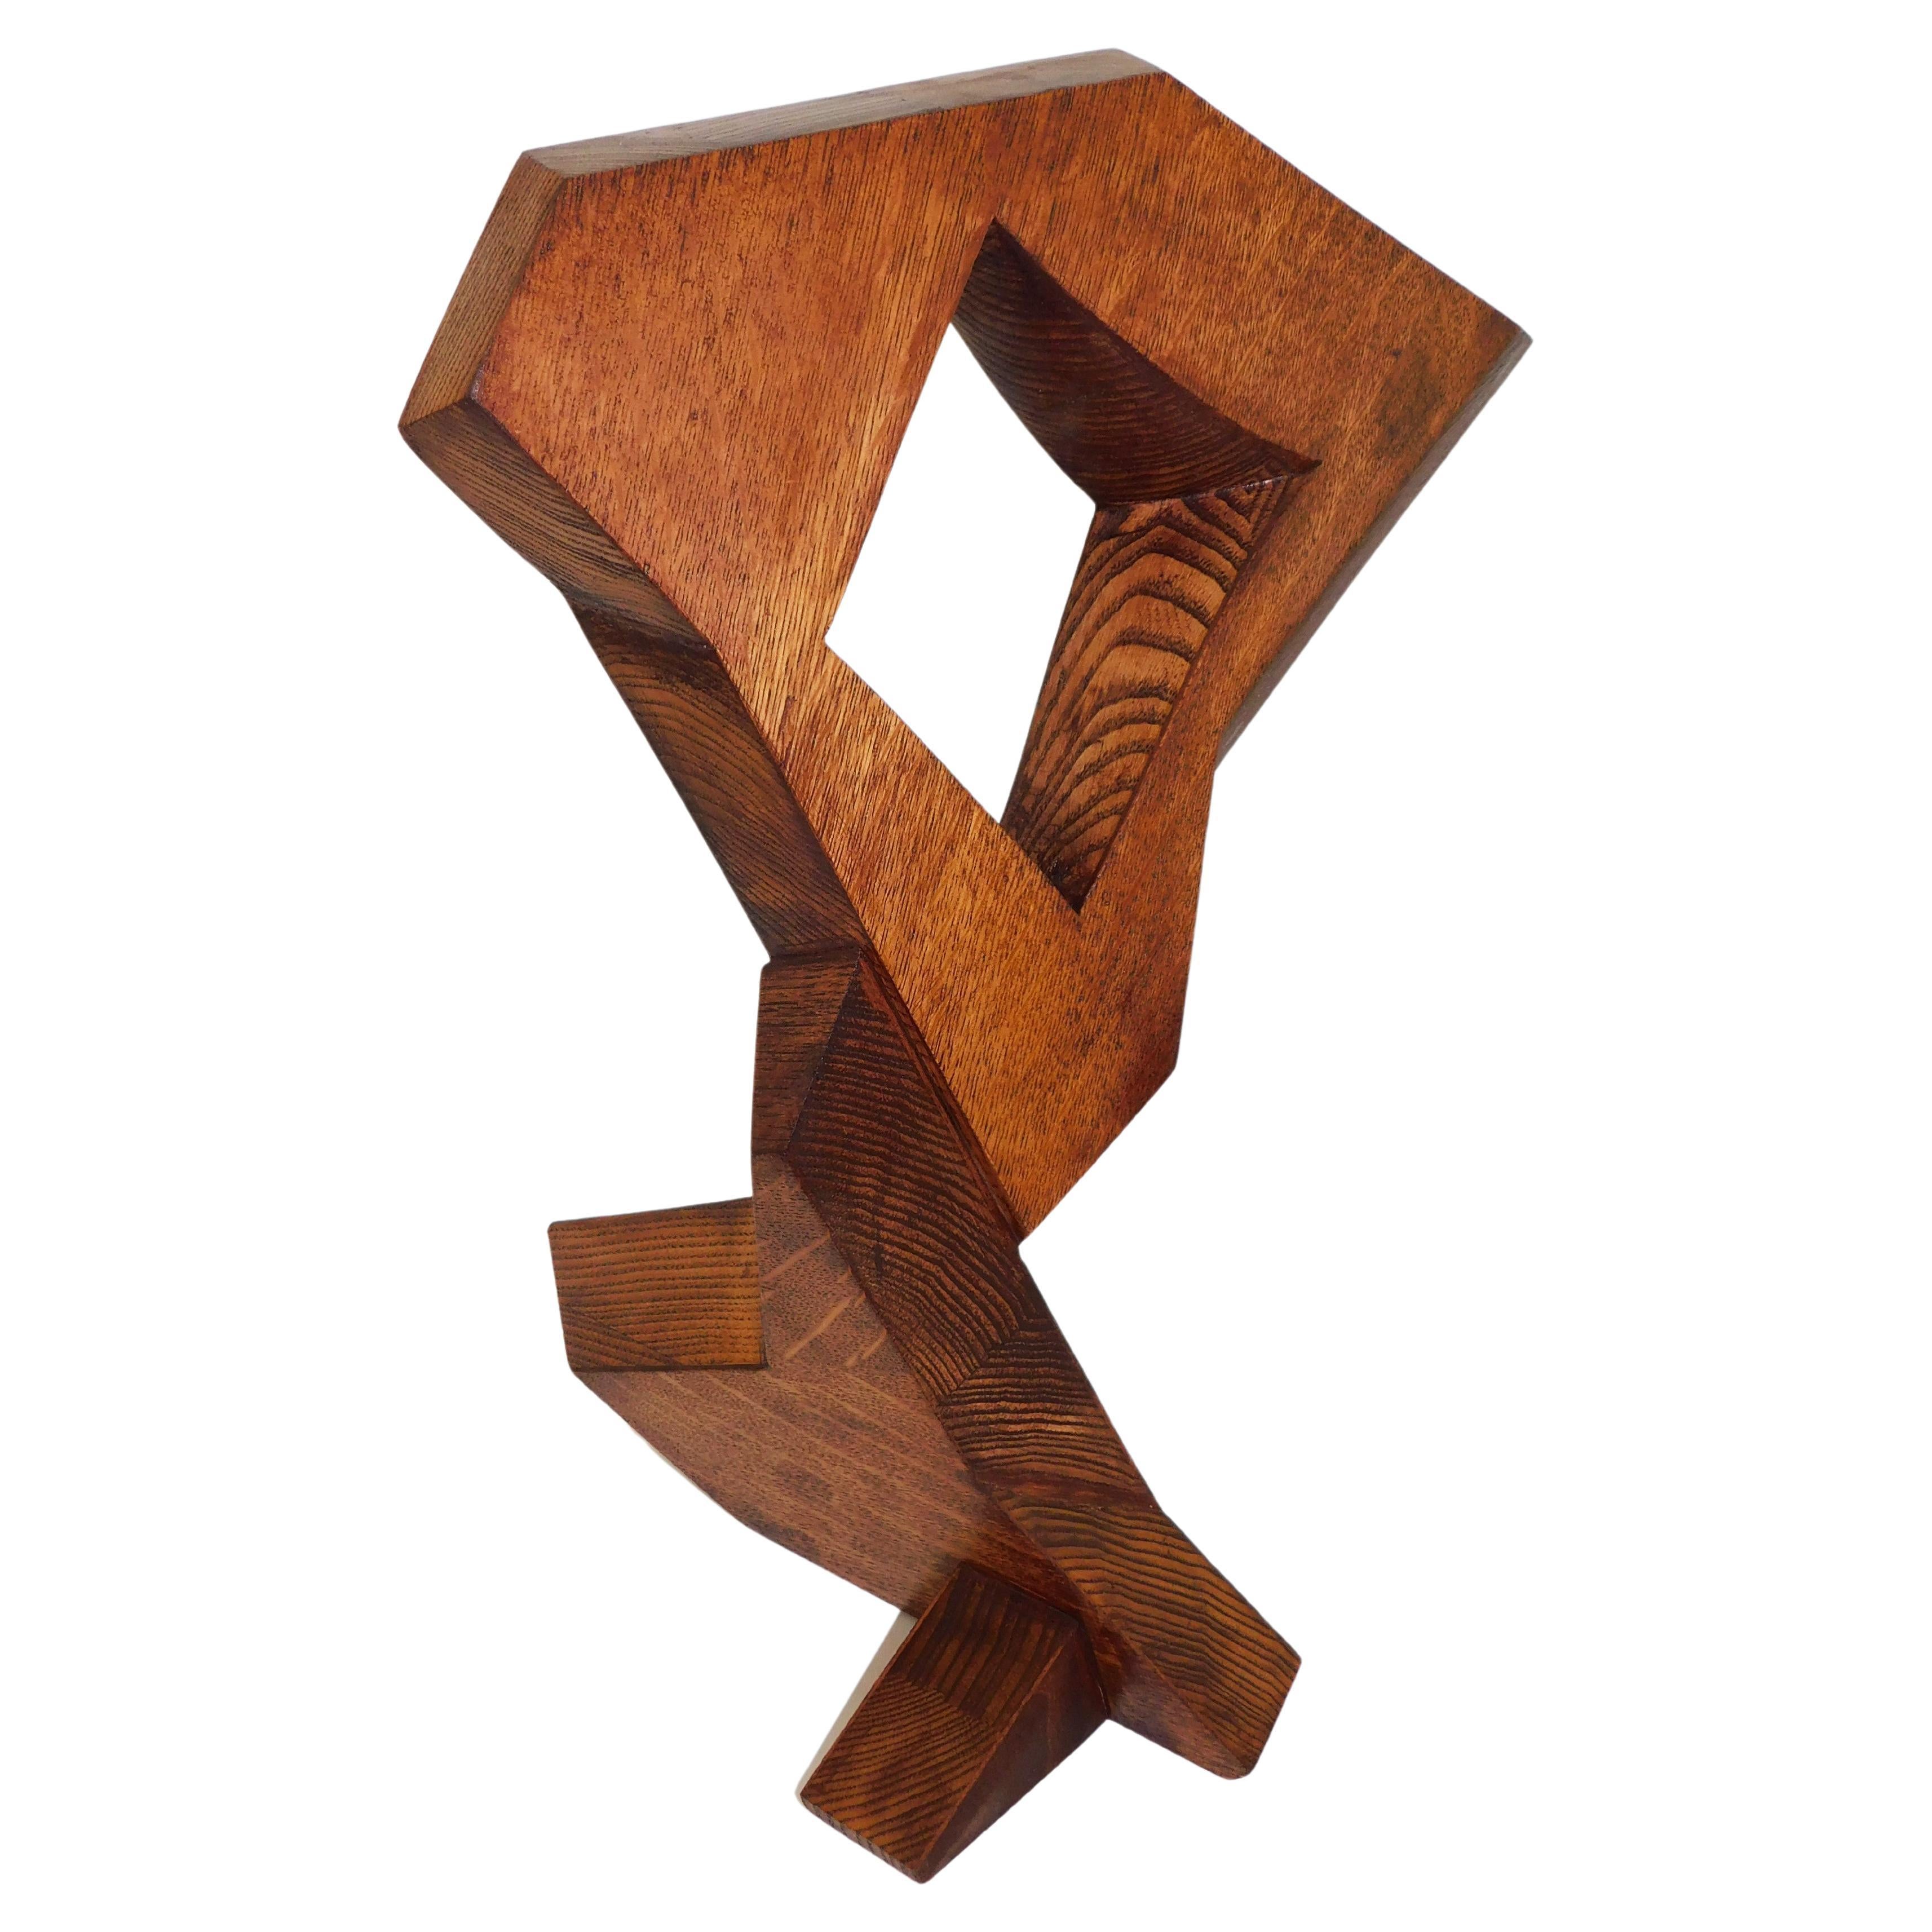 Signed Modern Abstract Constructivist Styled Wooden Oak Sculpture Czeslaw Budny